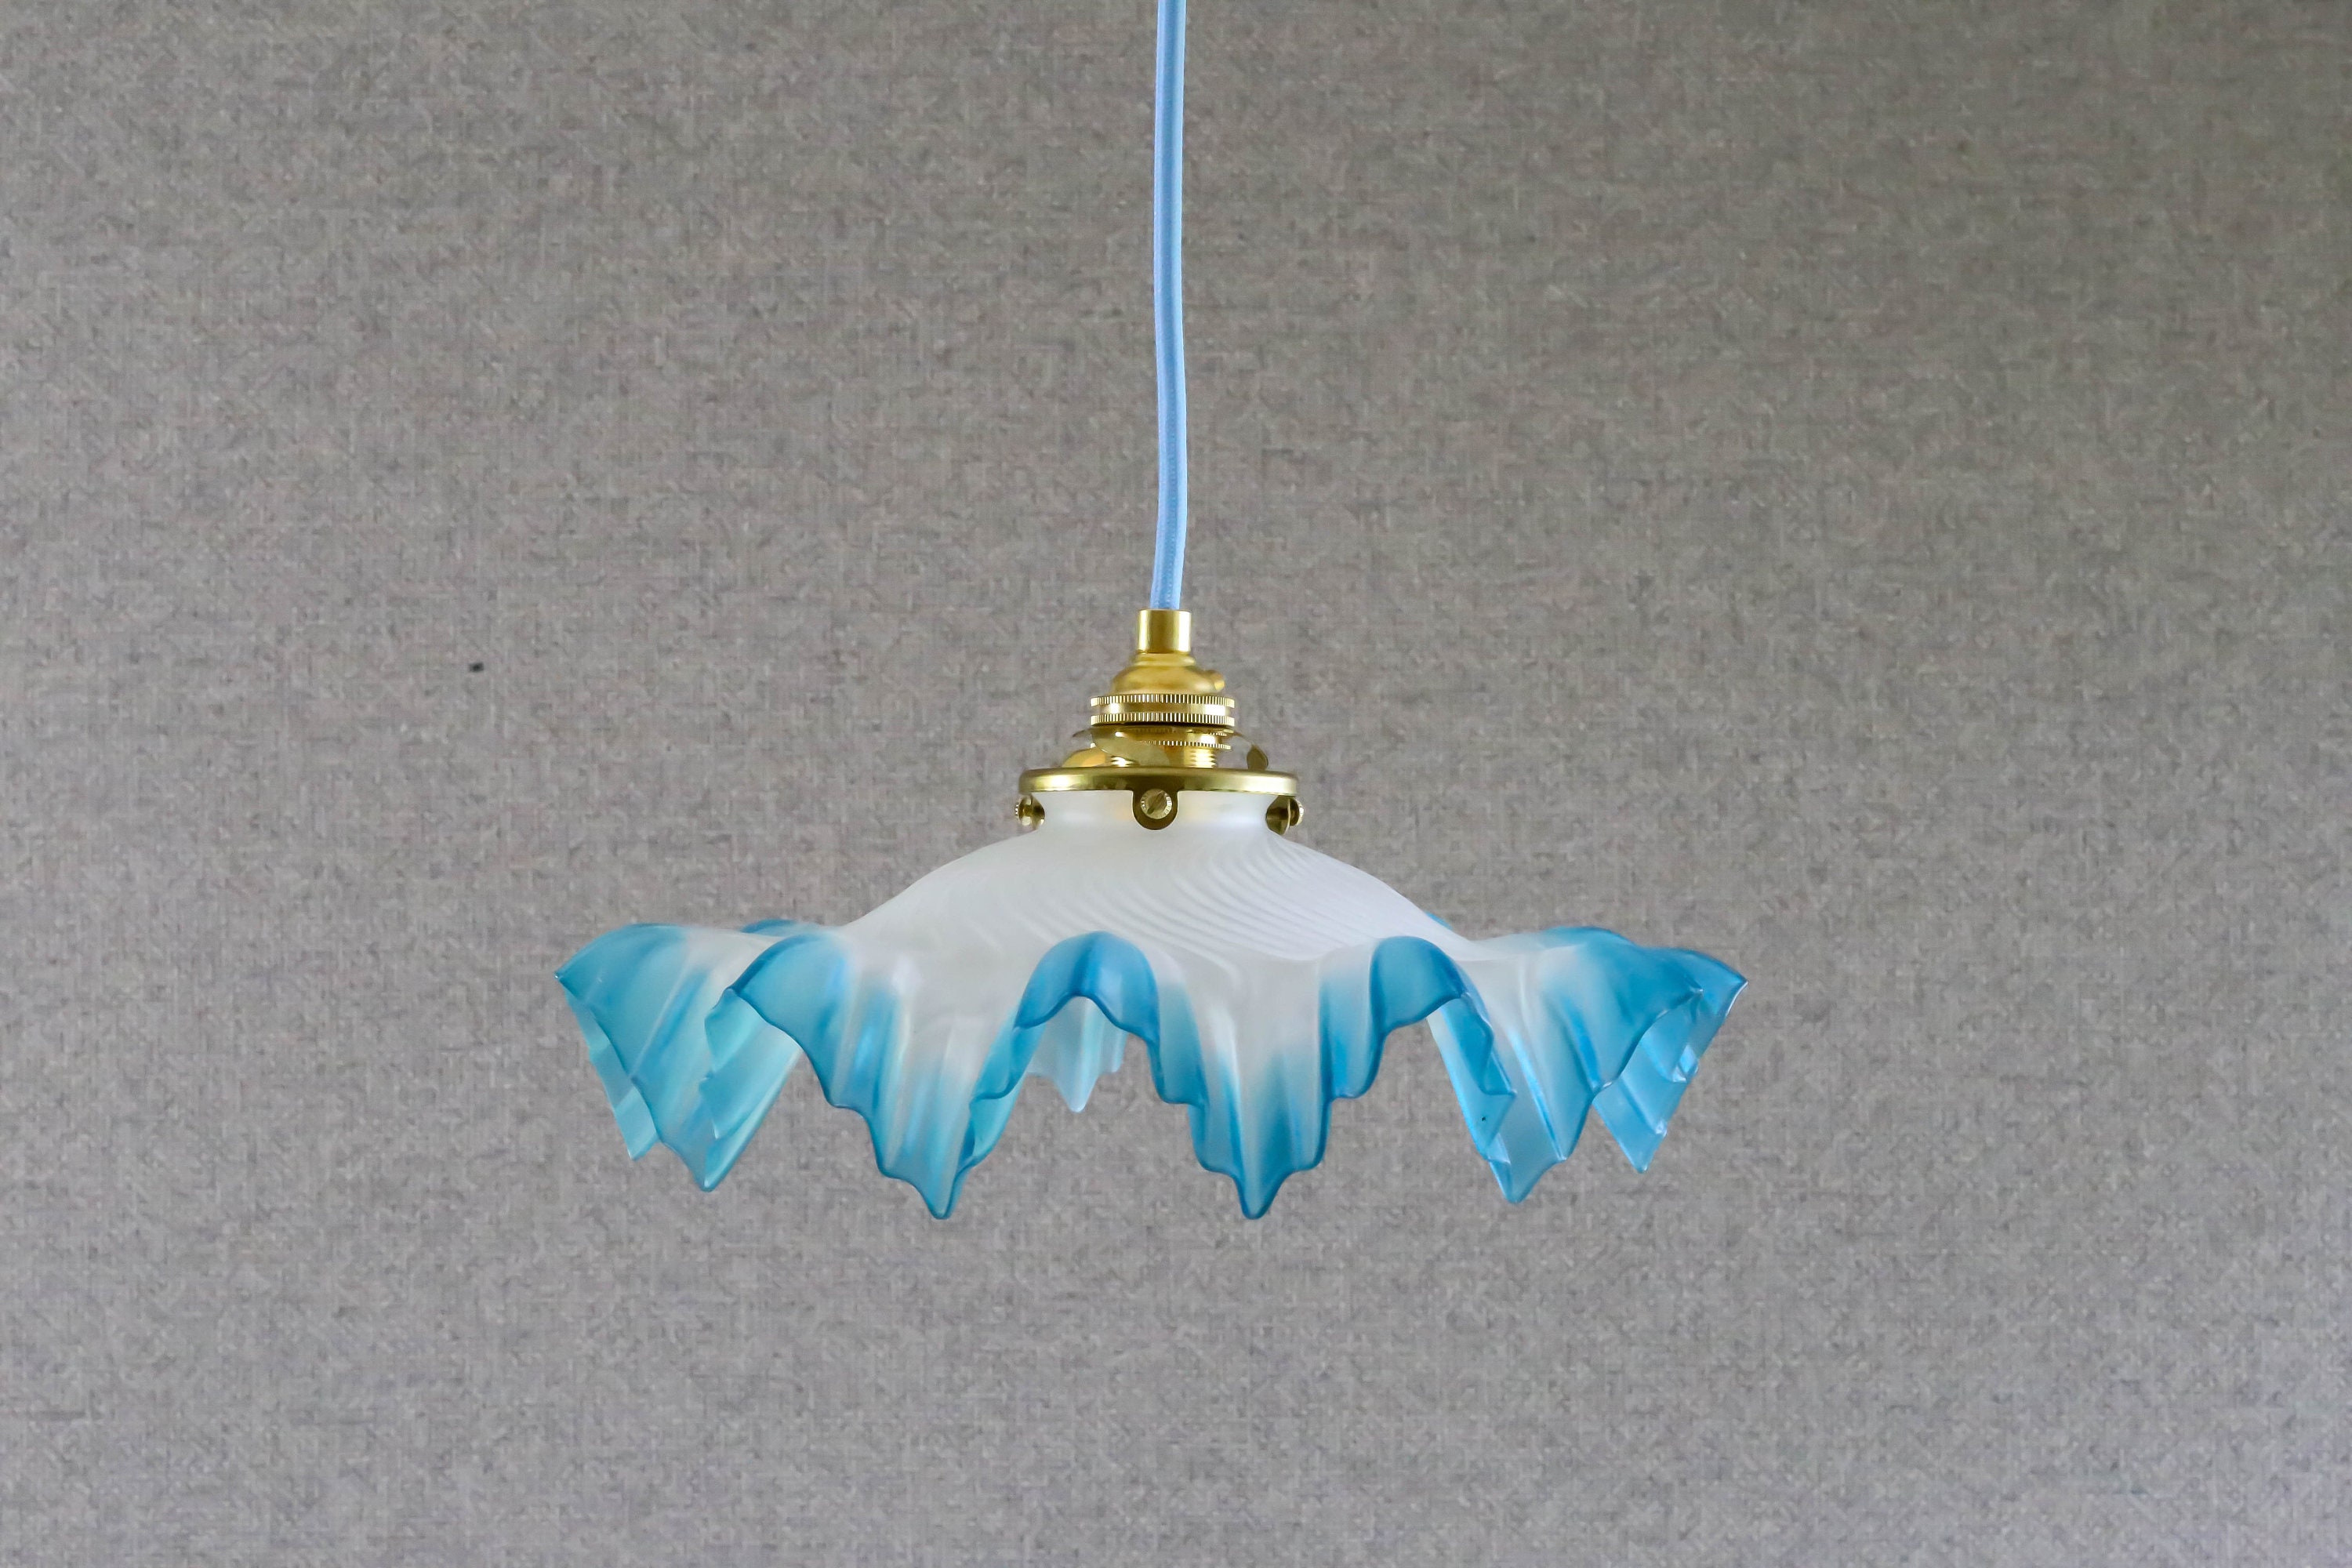 Antique French Ceiling Light in White & Blue Translucid Glass, Pendant Lamp - Circa 1930